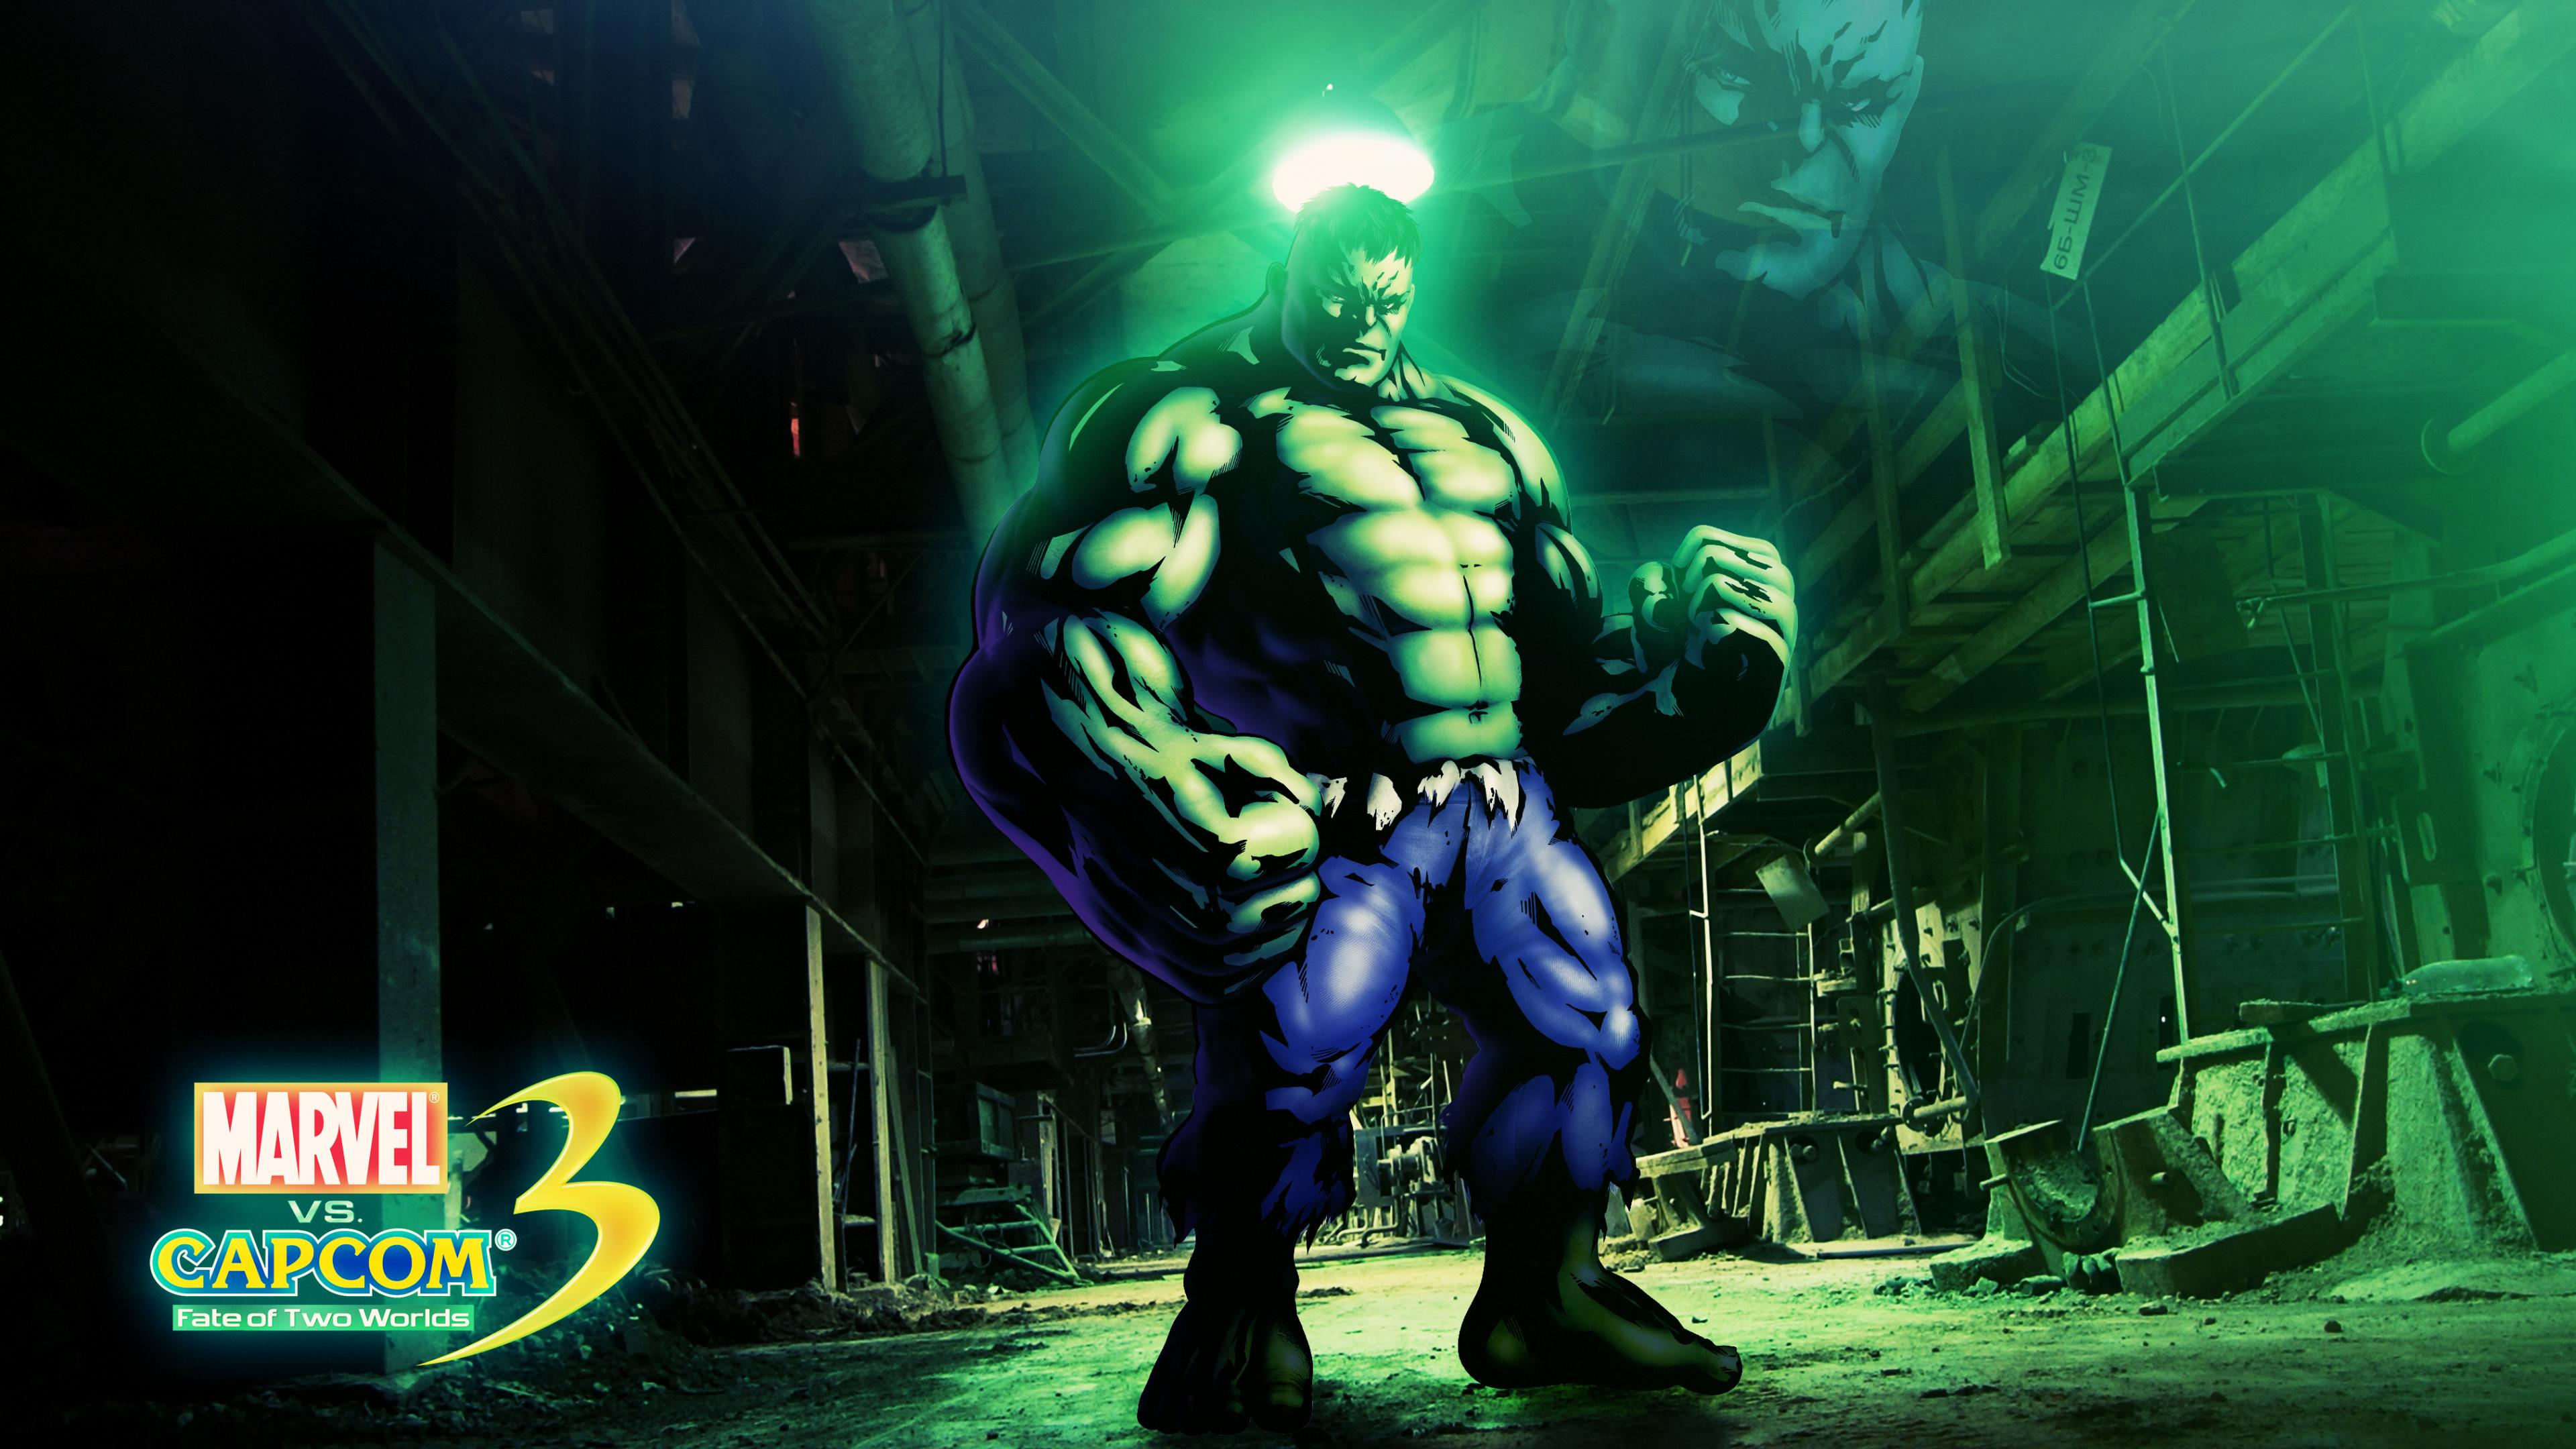 hulk wallpaper,action adventure game,fictional character,superhero,pc game,action figure